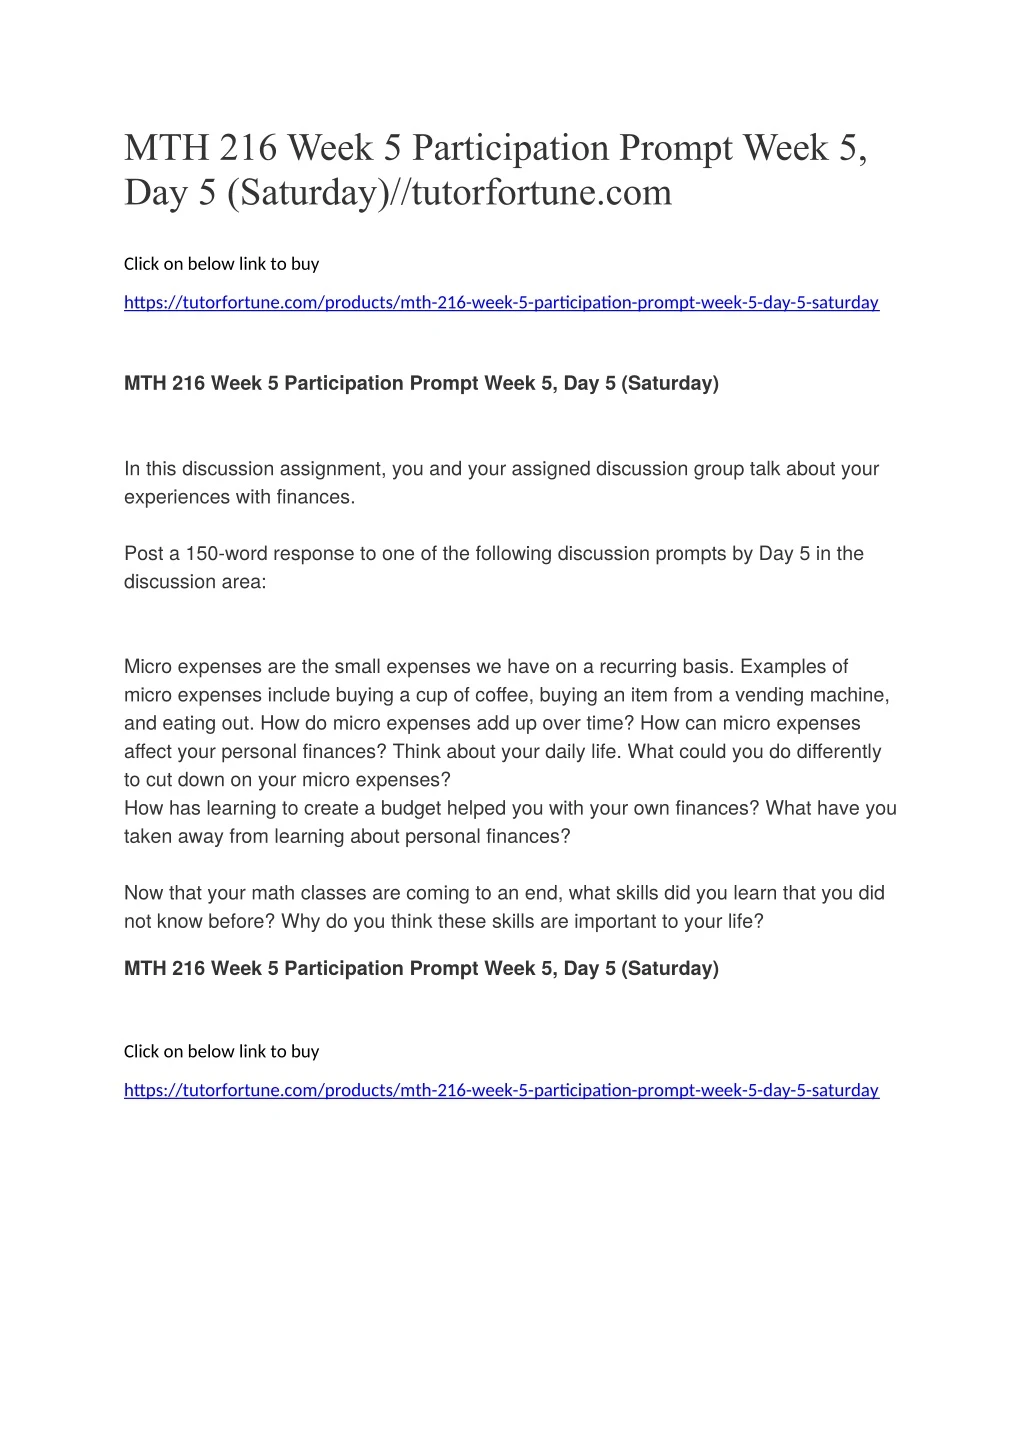 mth 216 week 5 participation prompt week